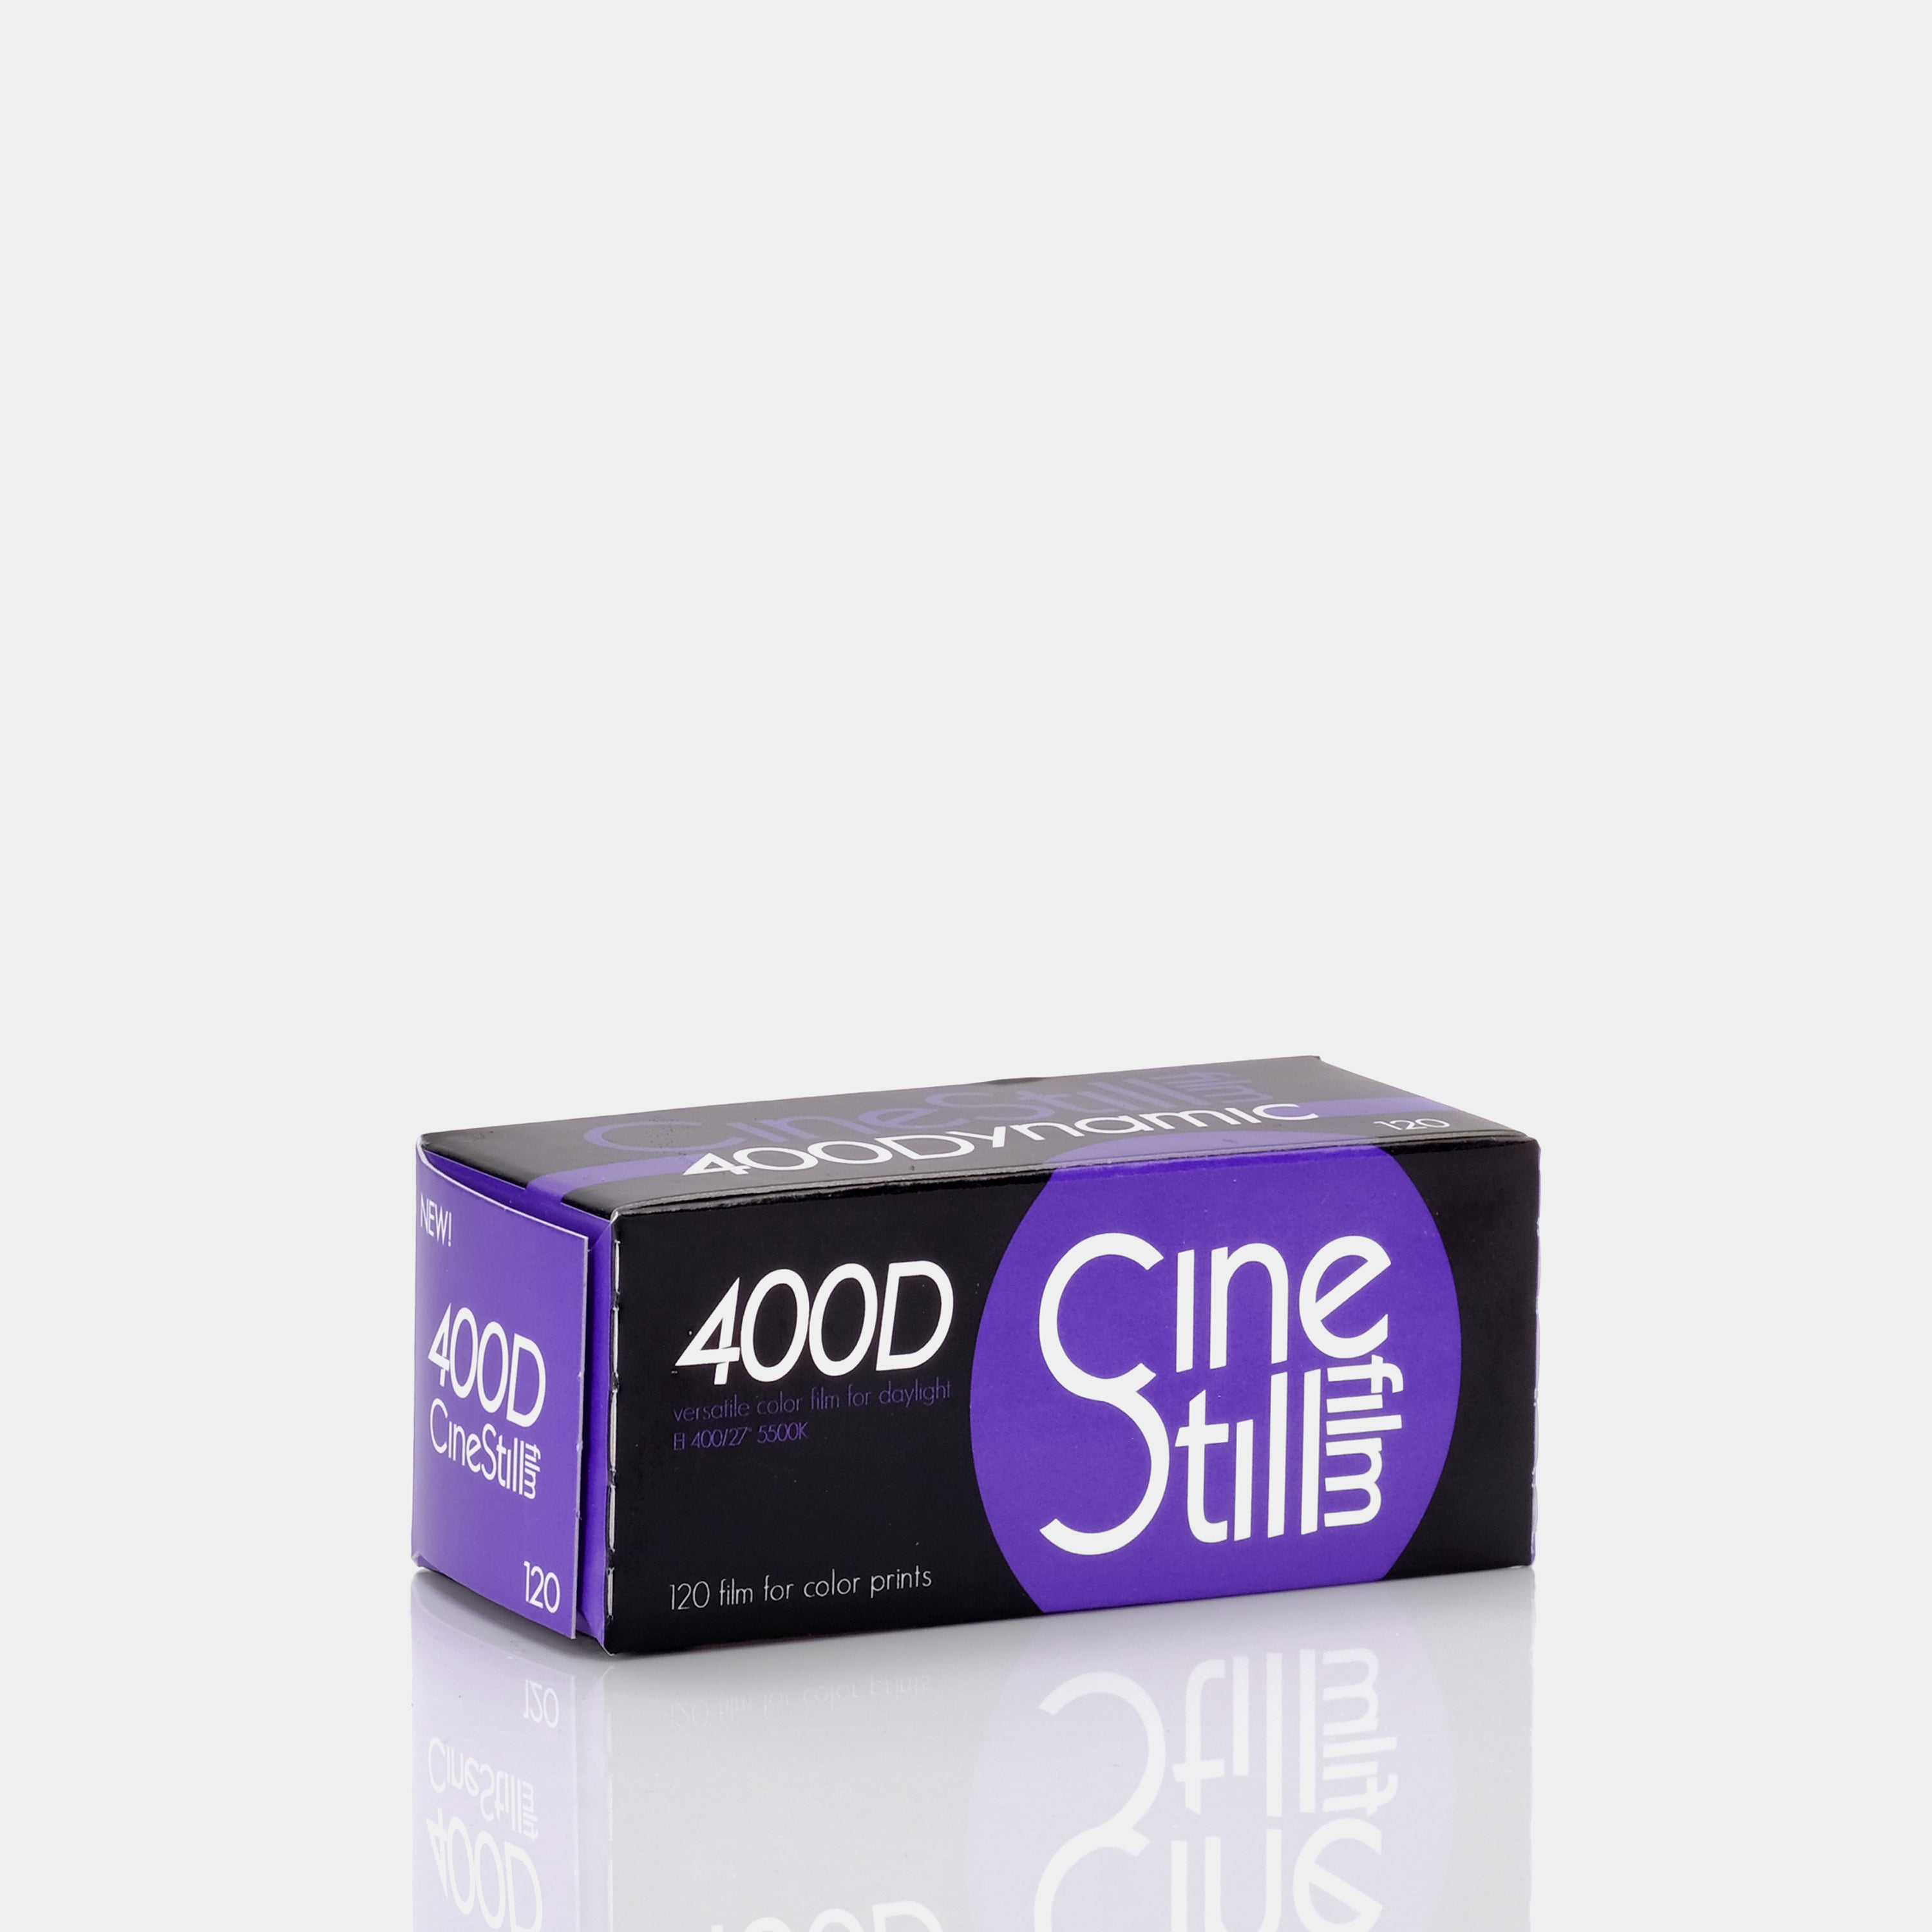 CineStill 400Dynamic Fine Grain Color 120 Film